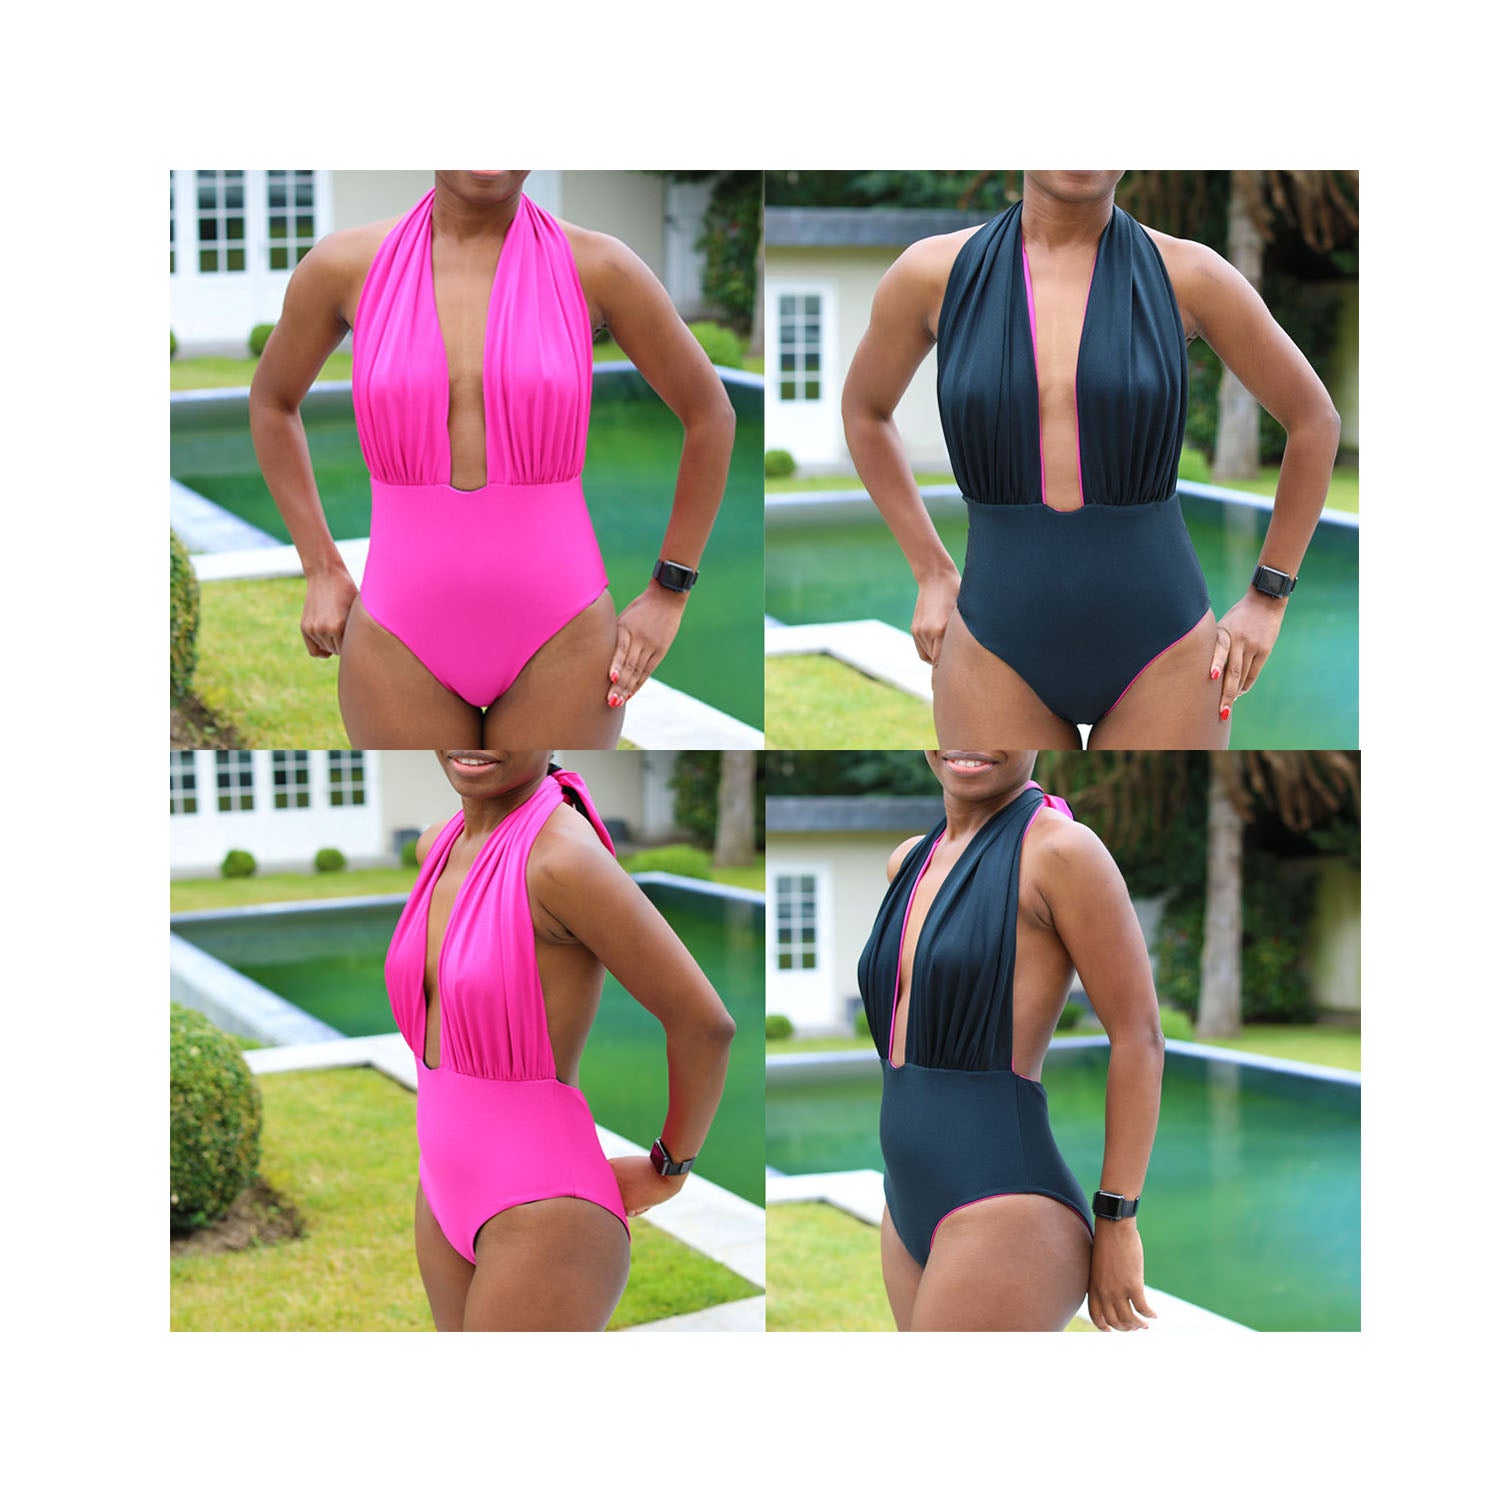 Ruched halter neck one-piece swimsuit, pdf sewing patterns, sewing patterns, gigipatterns, how to make bikini, diy bikini